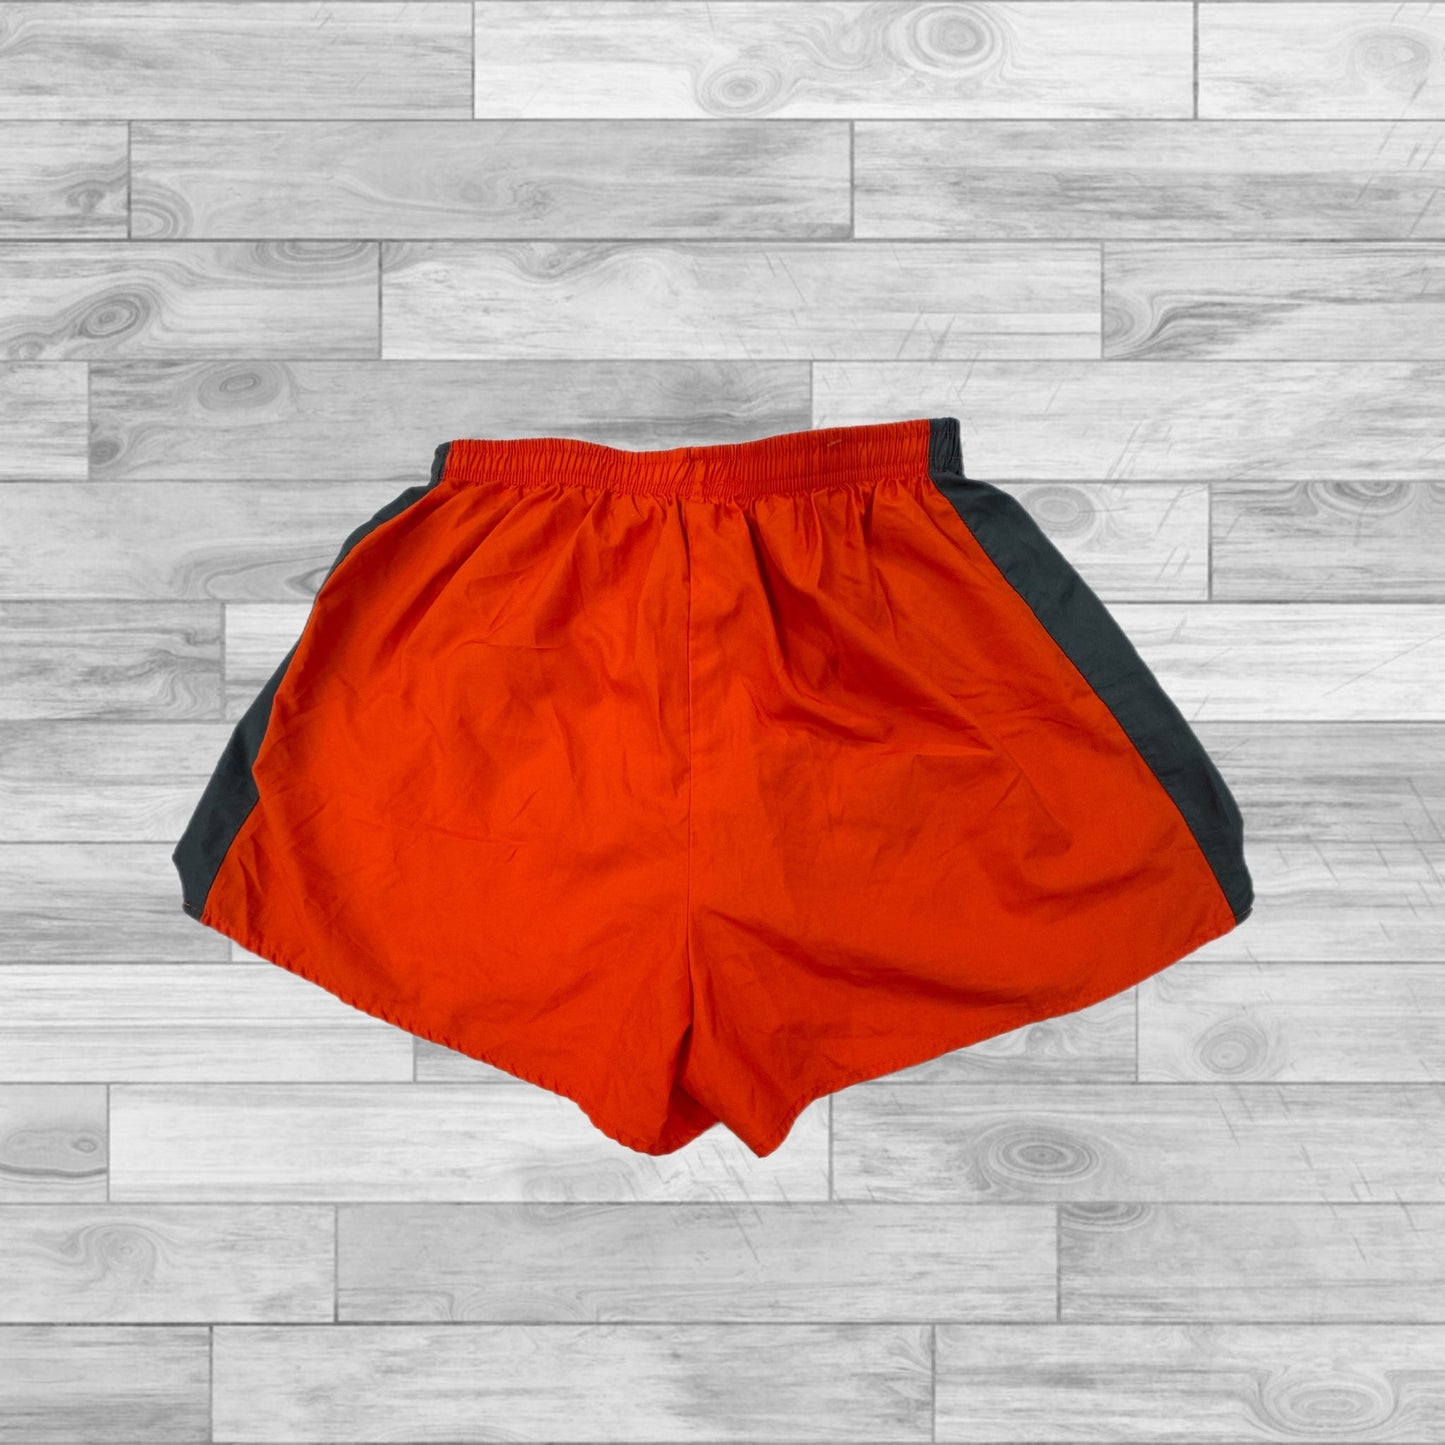 Orange Shorts Nike Apparel, Size M